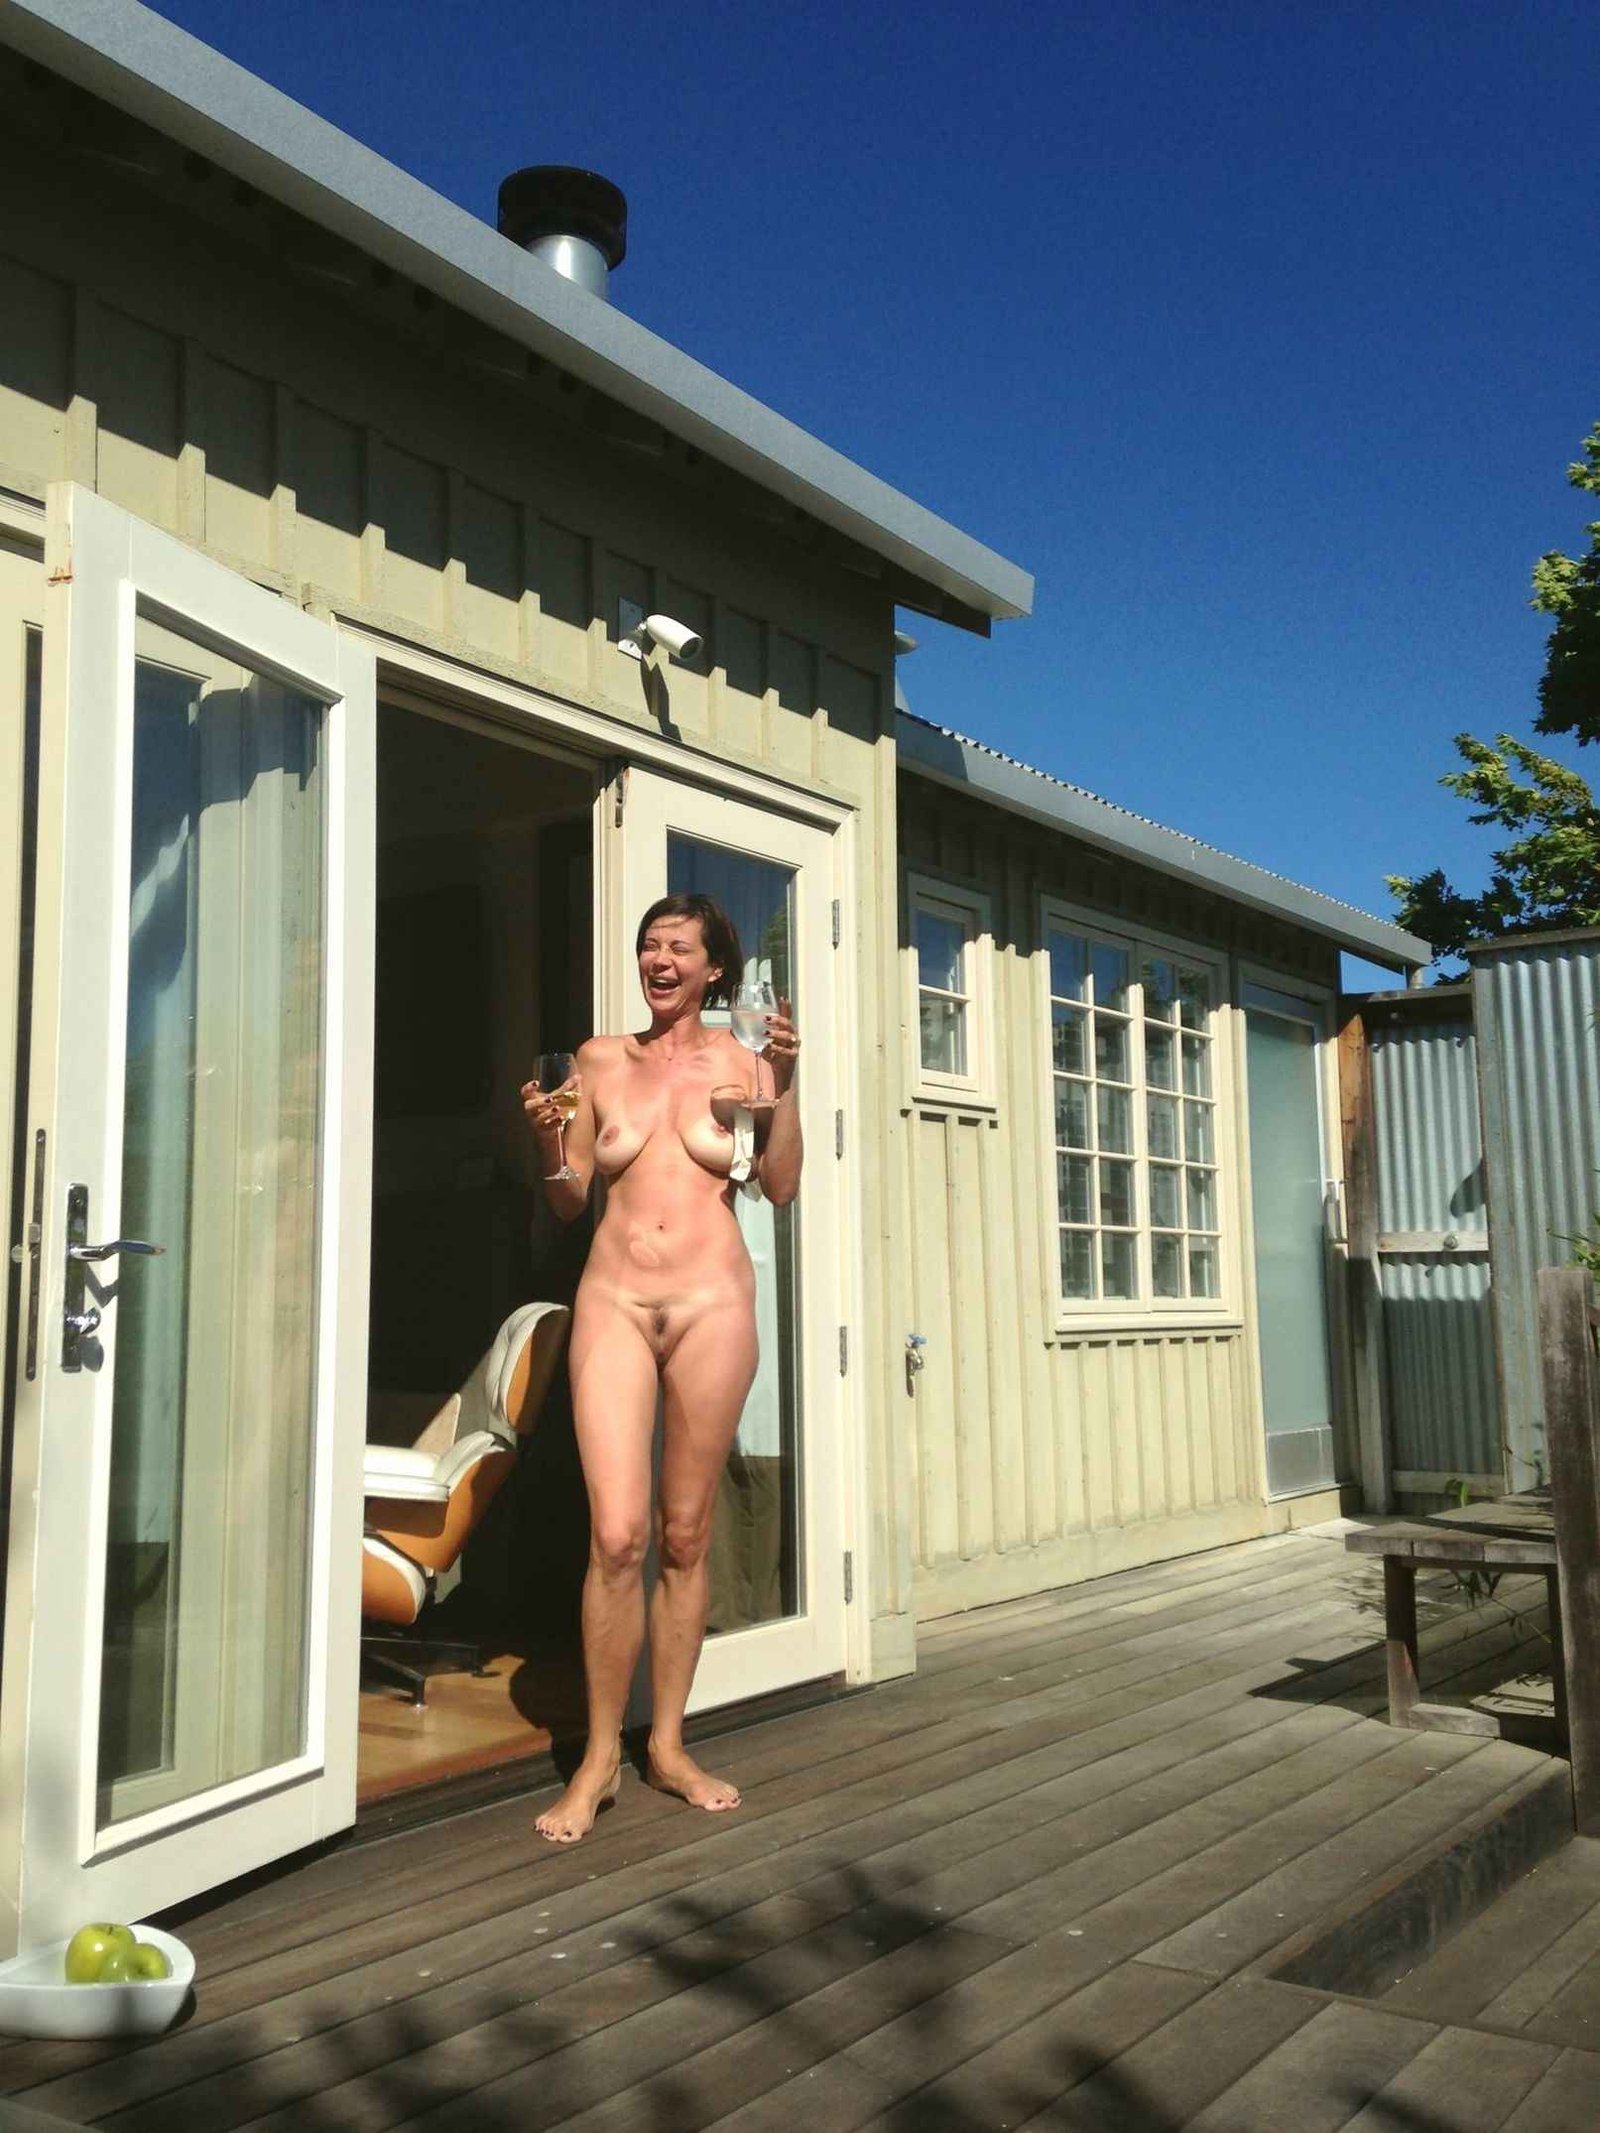 Catherine Bell nue, les photos intimes non censurée